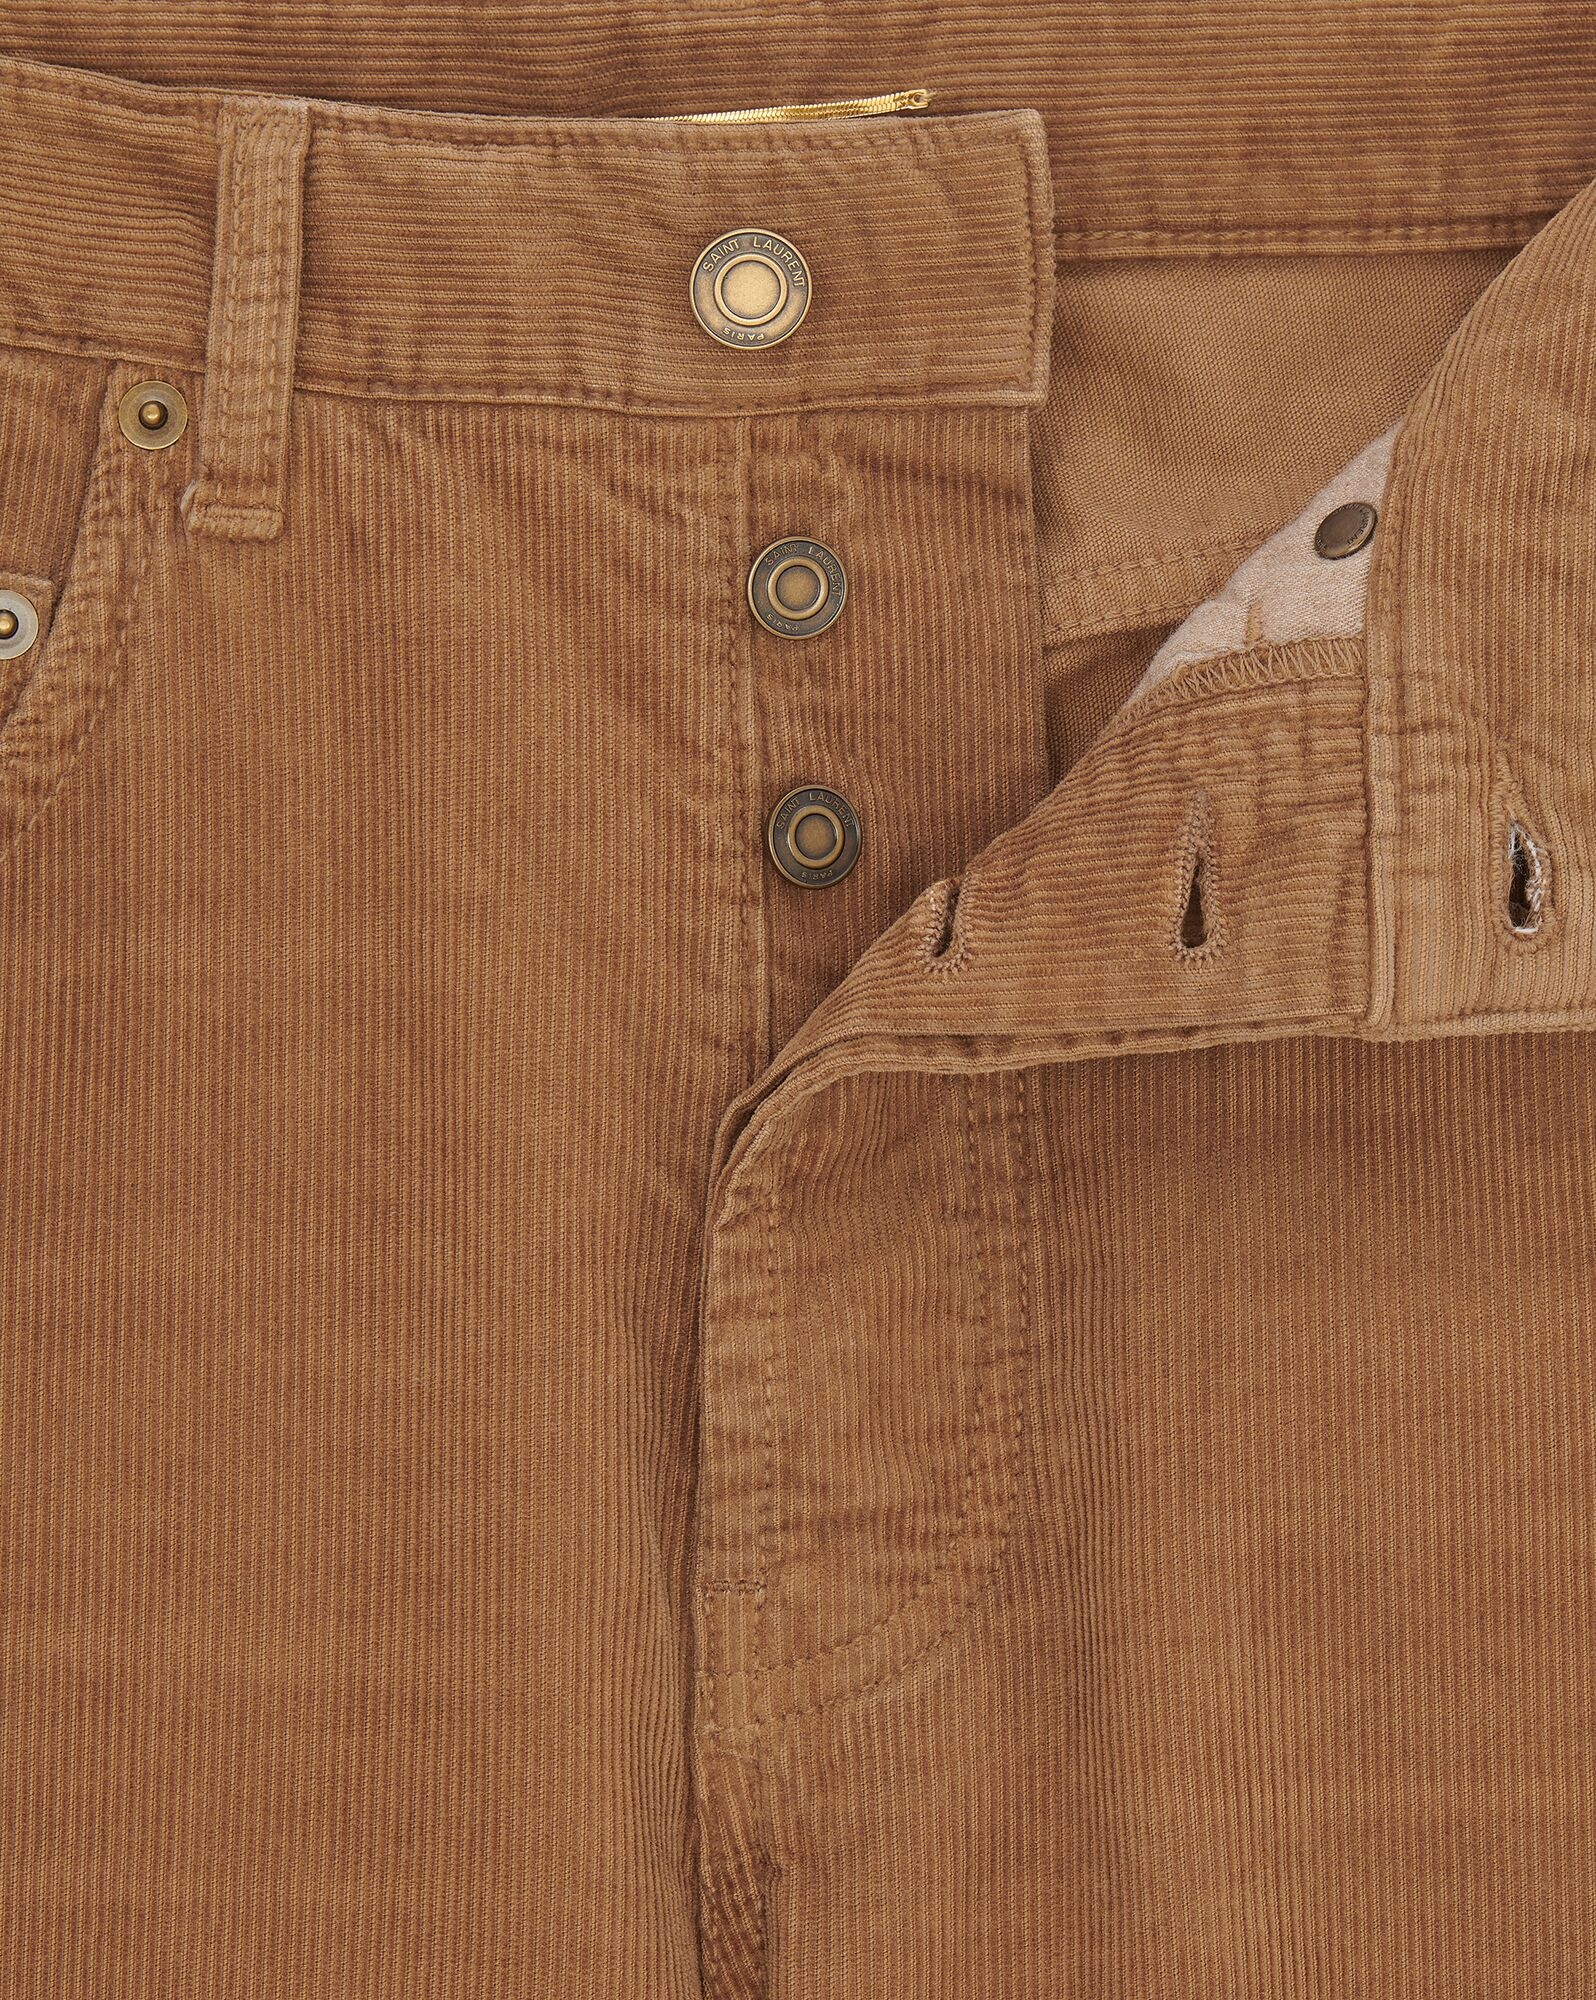 long baggy jeans in fall leaf corduroy - 3